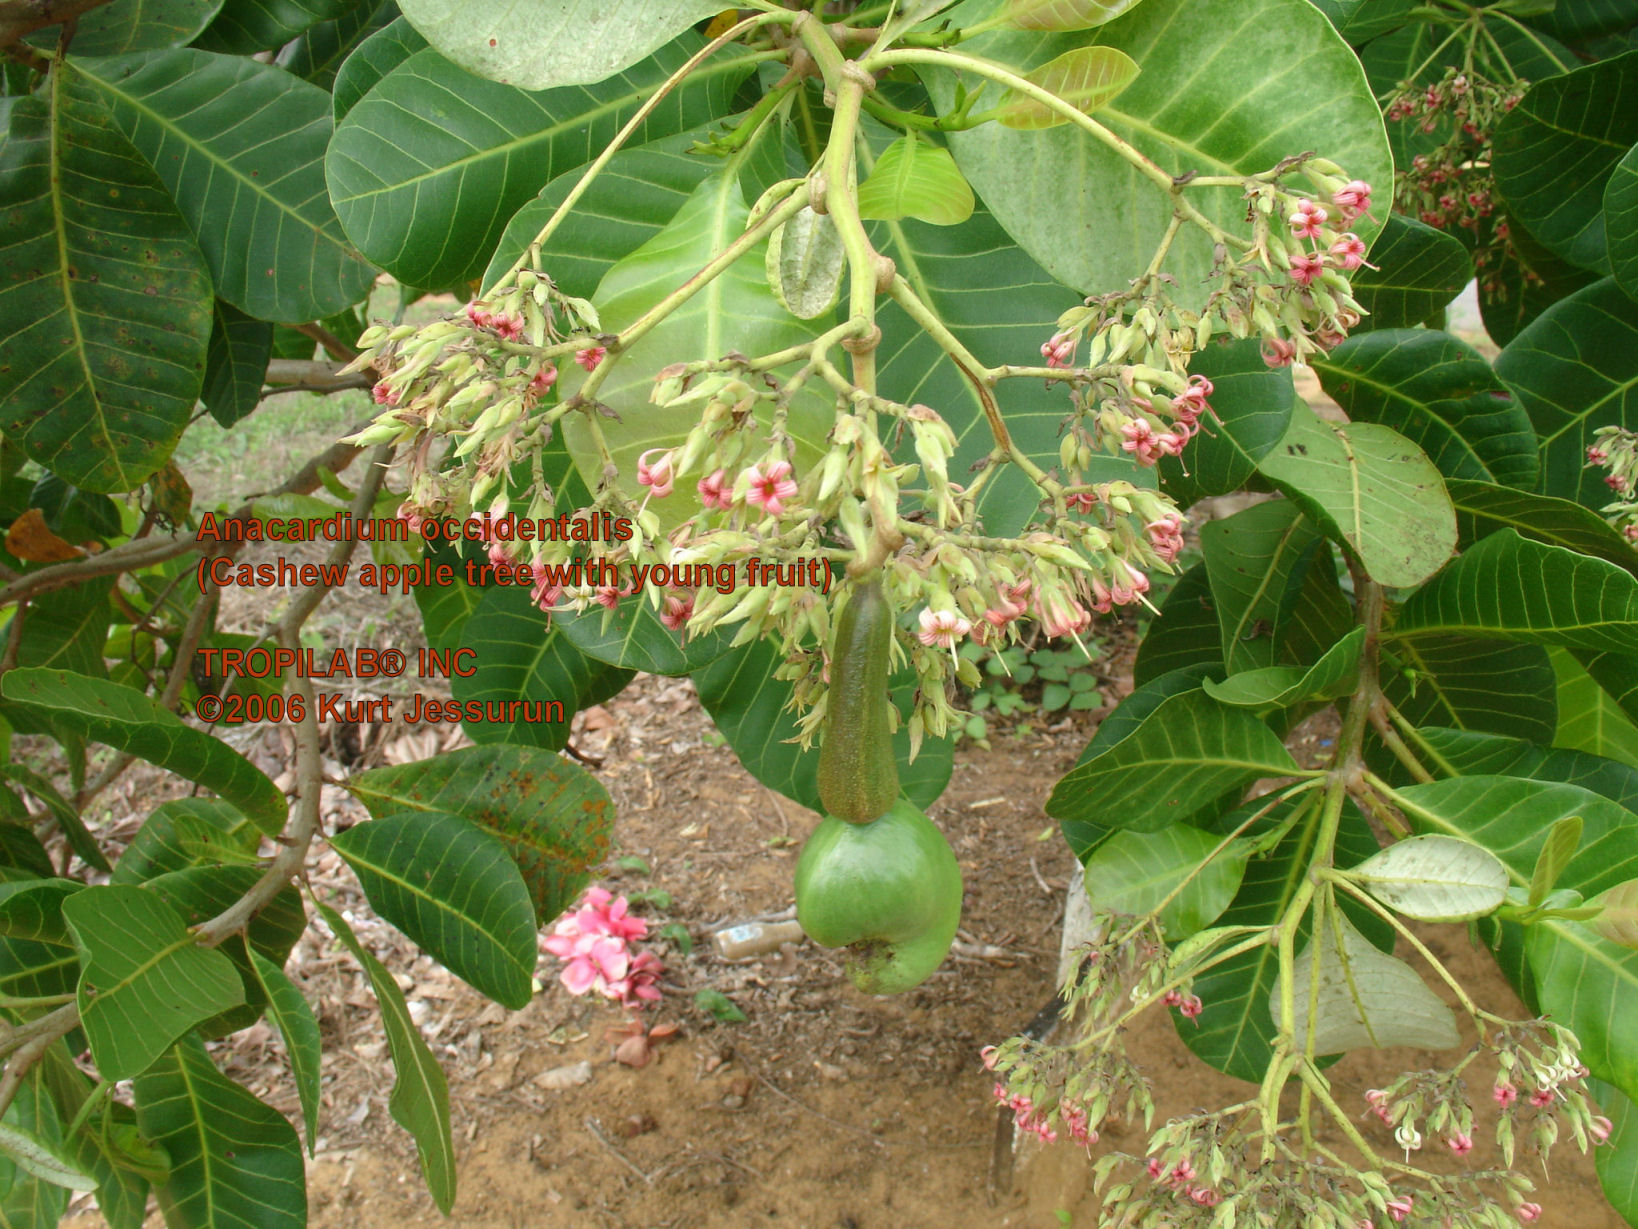 Anacardium occidentale - Cashew apple